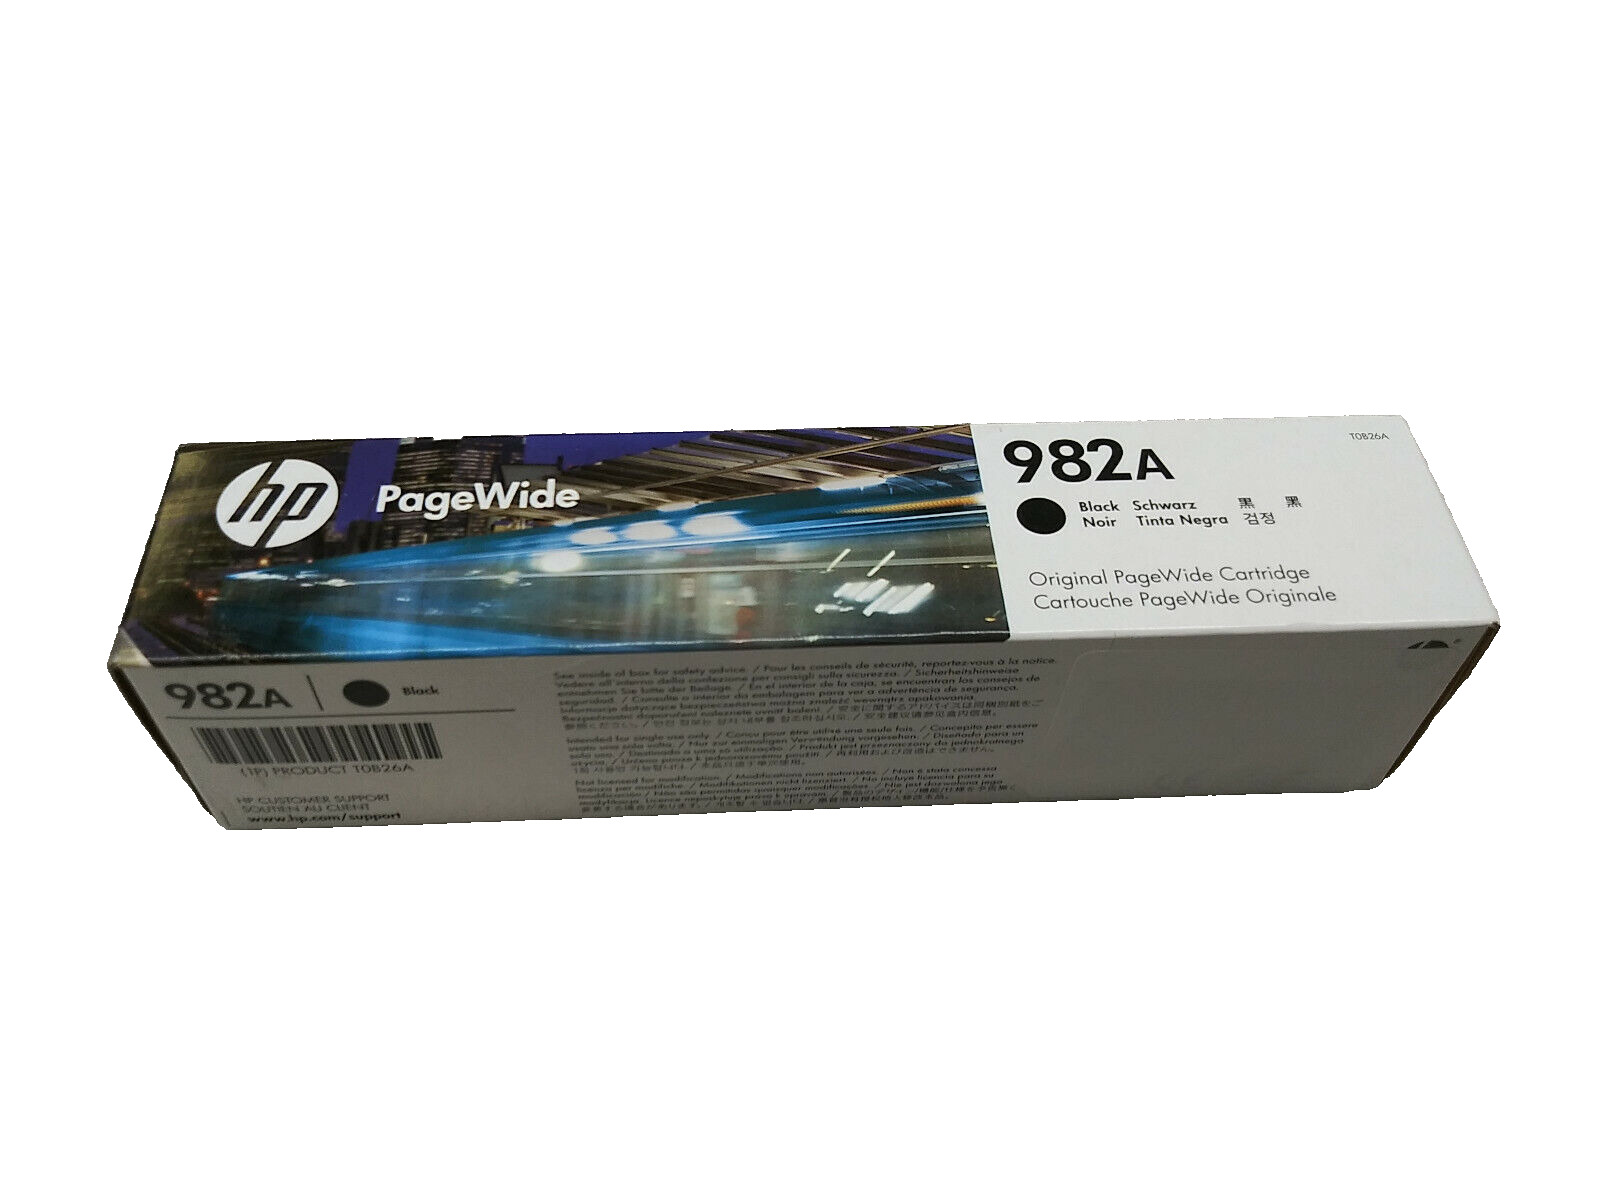 OEM HP 982A Original PageWide Cartridge High Yield for HP Printers, Black T0B26A